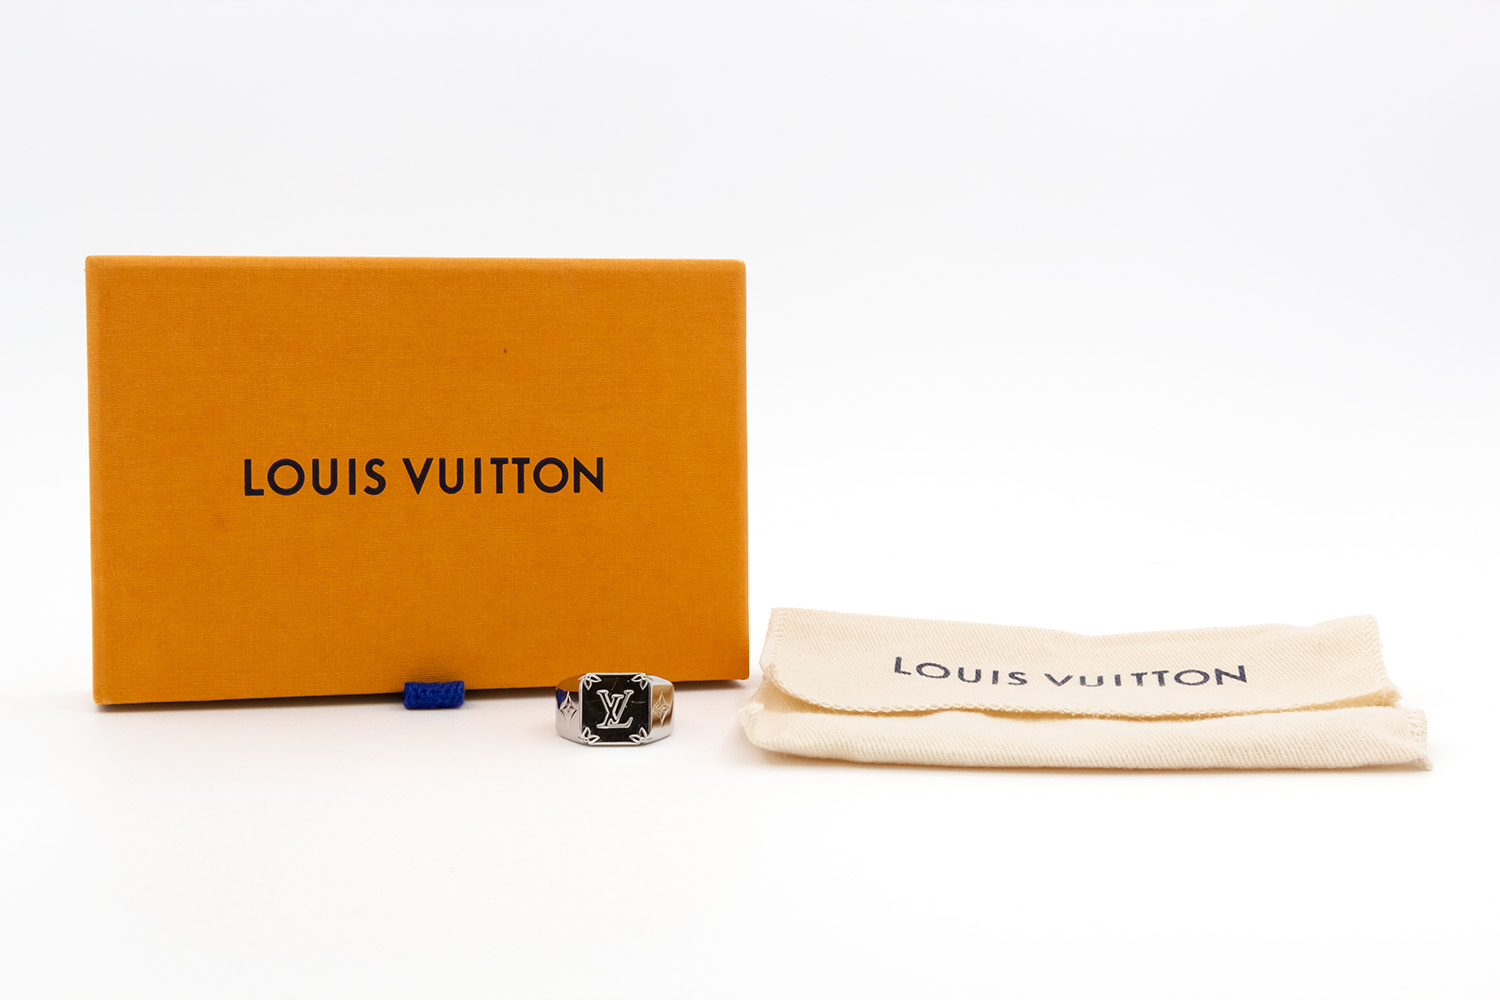 Shop Louis Vuitton Monogram signet ring (M62488) by SolidConnection